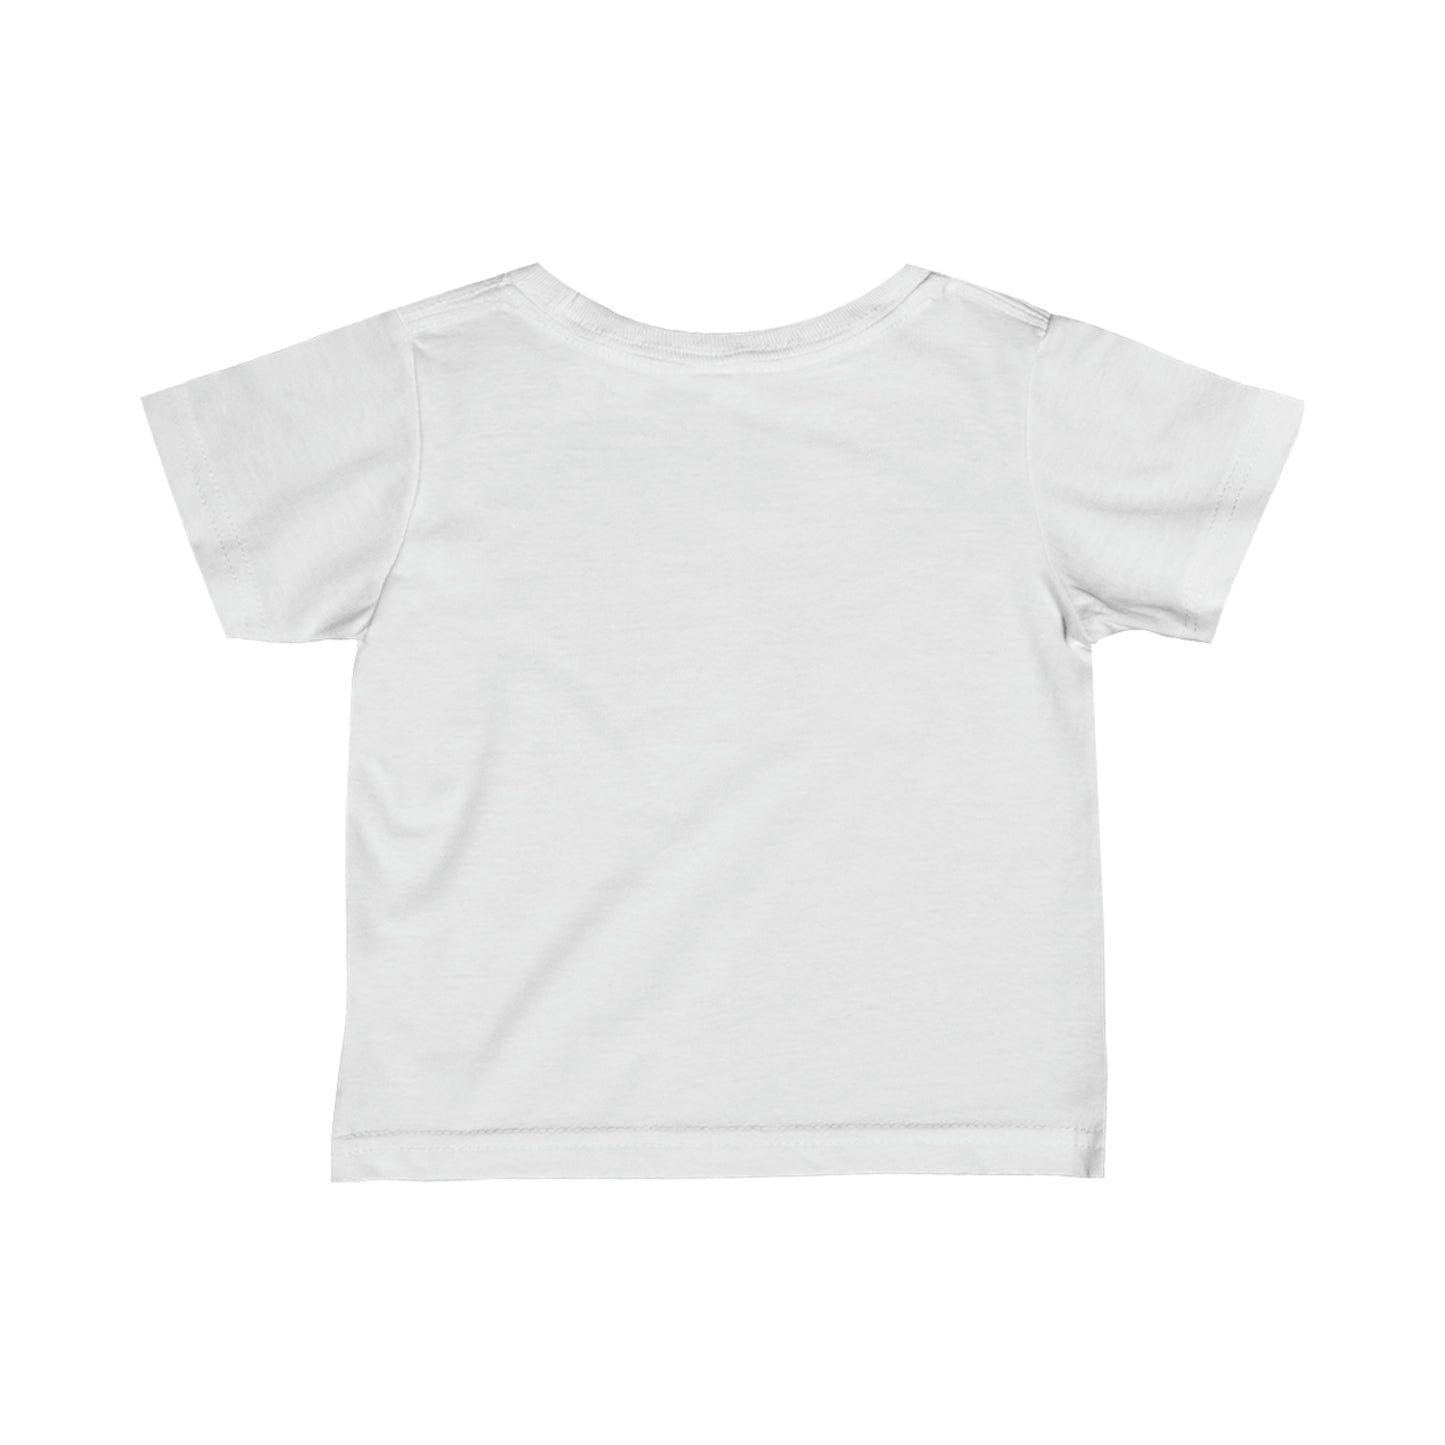 Warning Melt Infant T-Shirt